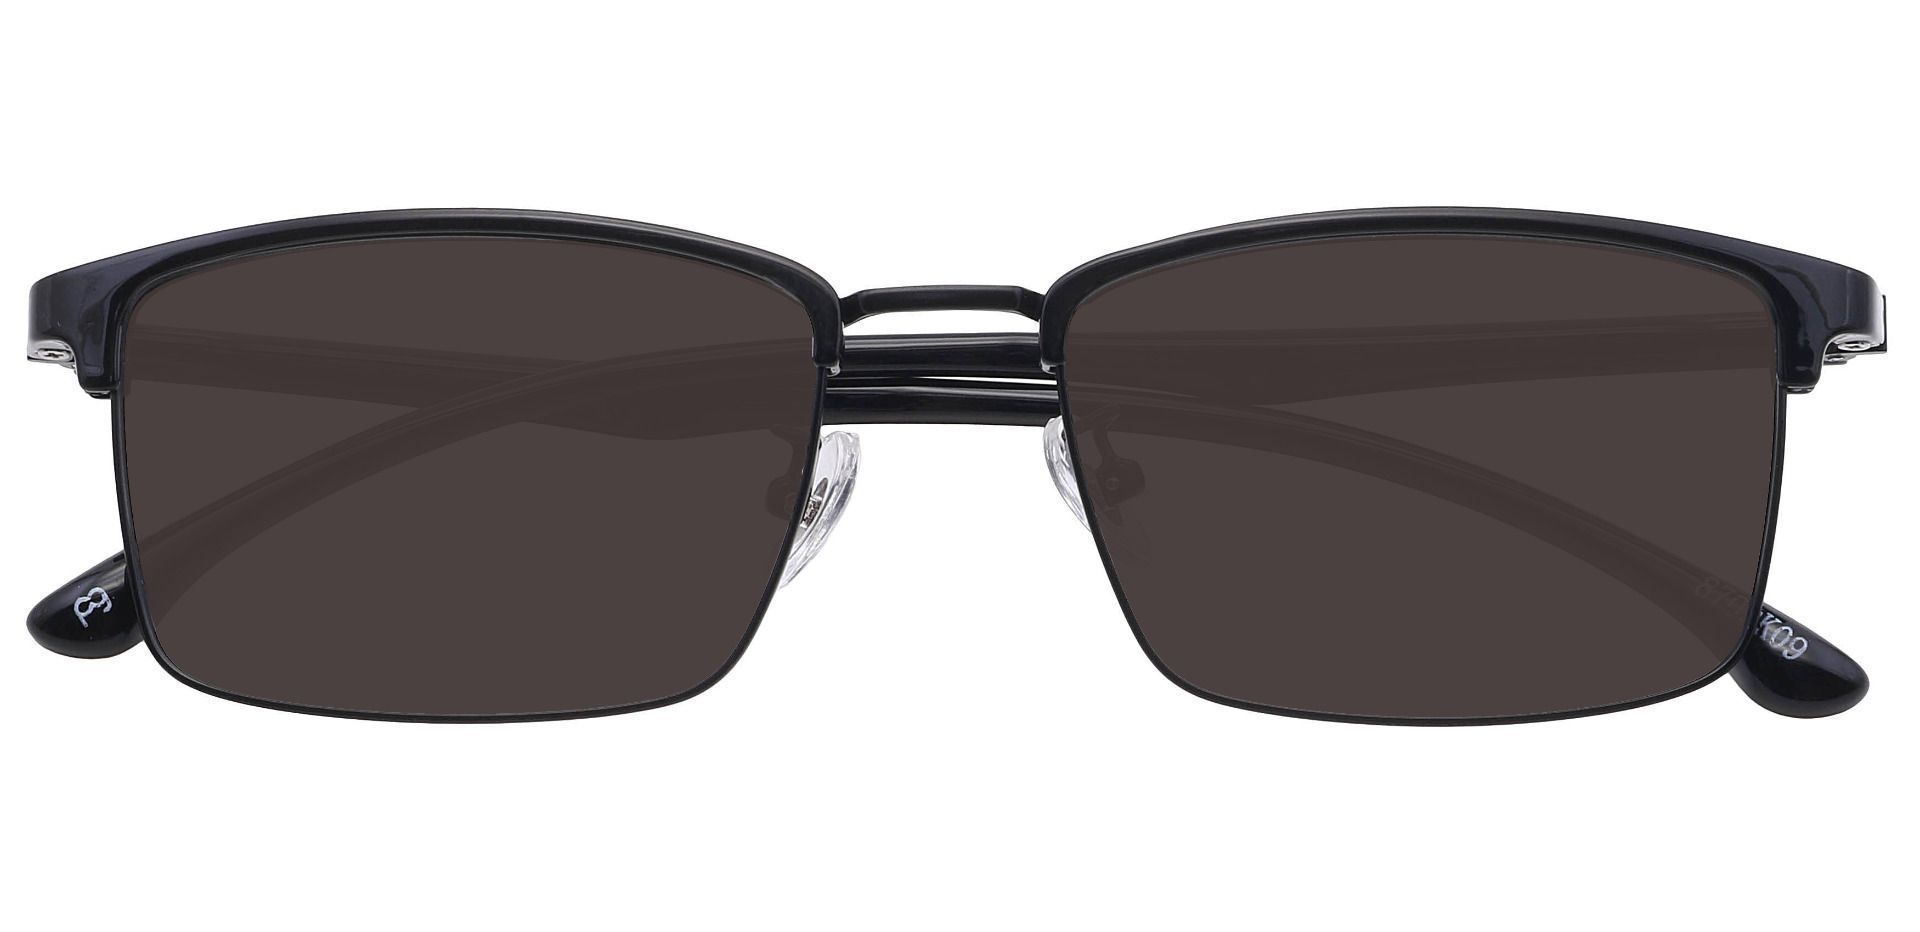 Young Browline Prescription Sunglasses - Black Frame With Gray Lenses